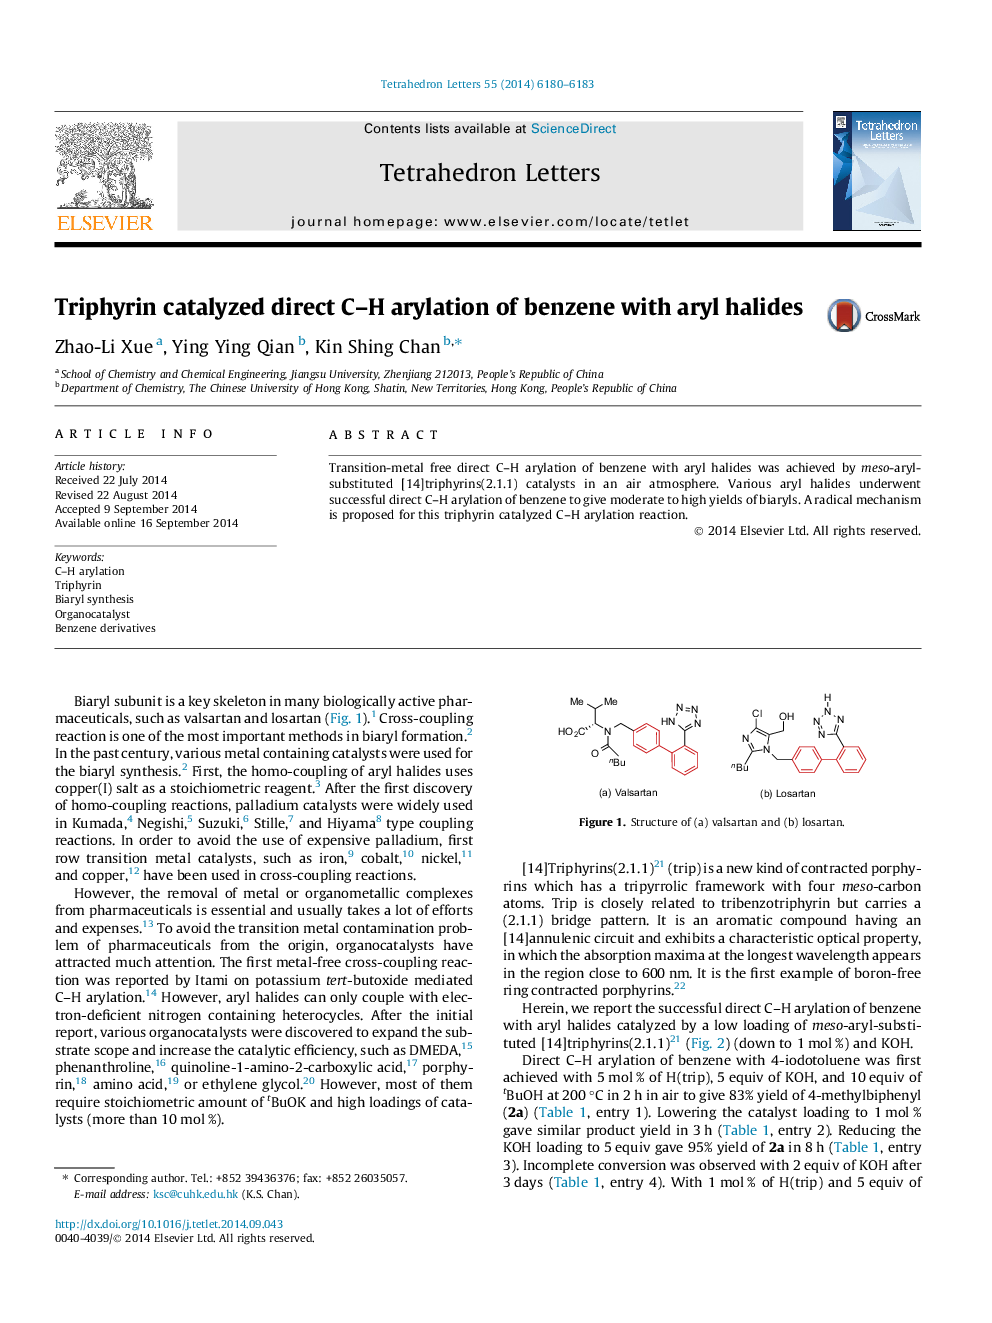 Triphyrin catalyzed direct C-H arylation of benzene with aryl halides